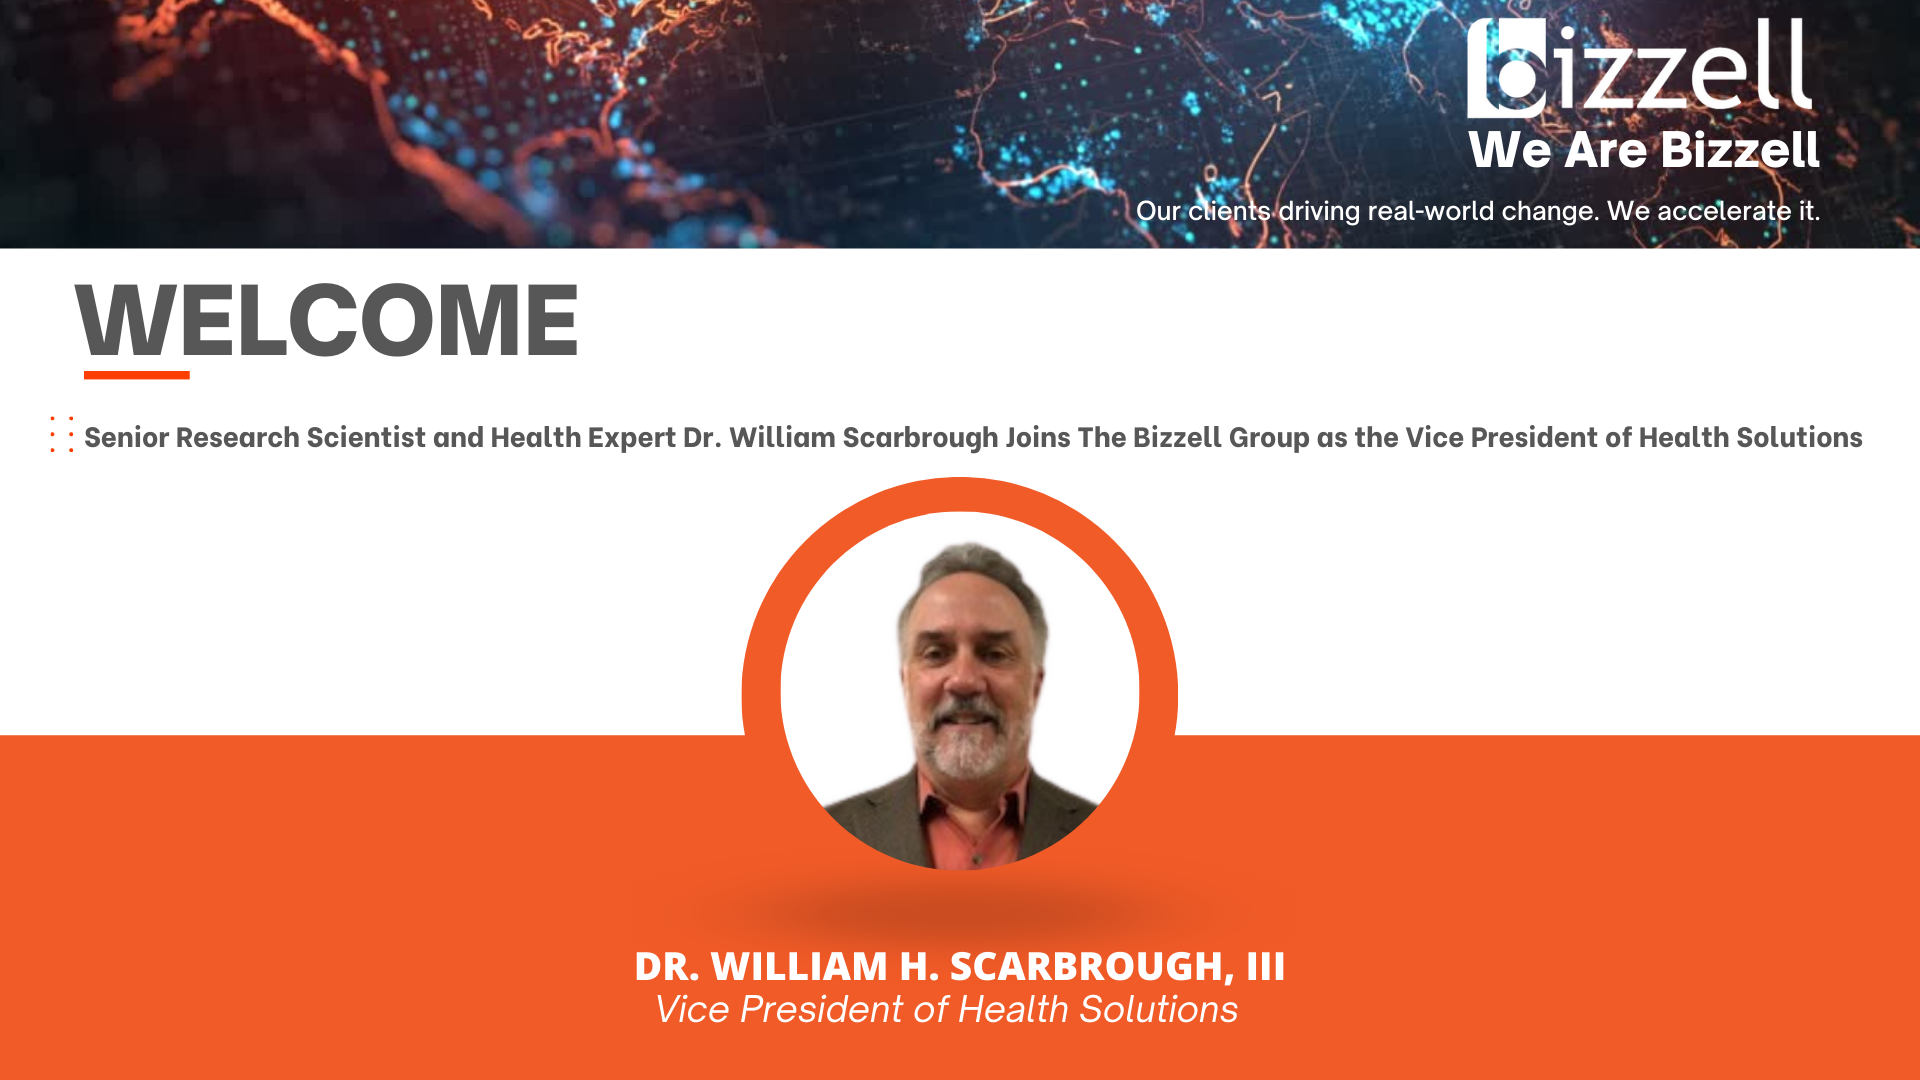 Dr. William H. Scarbrough, III